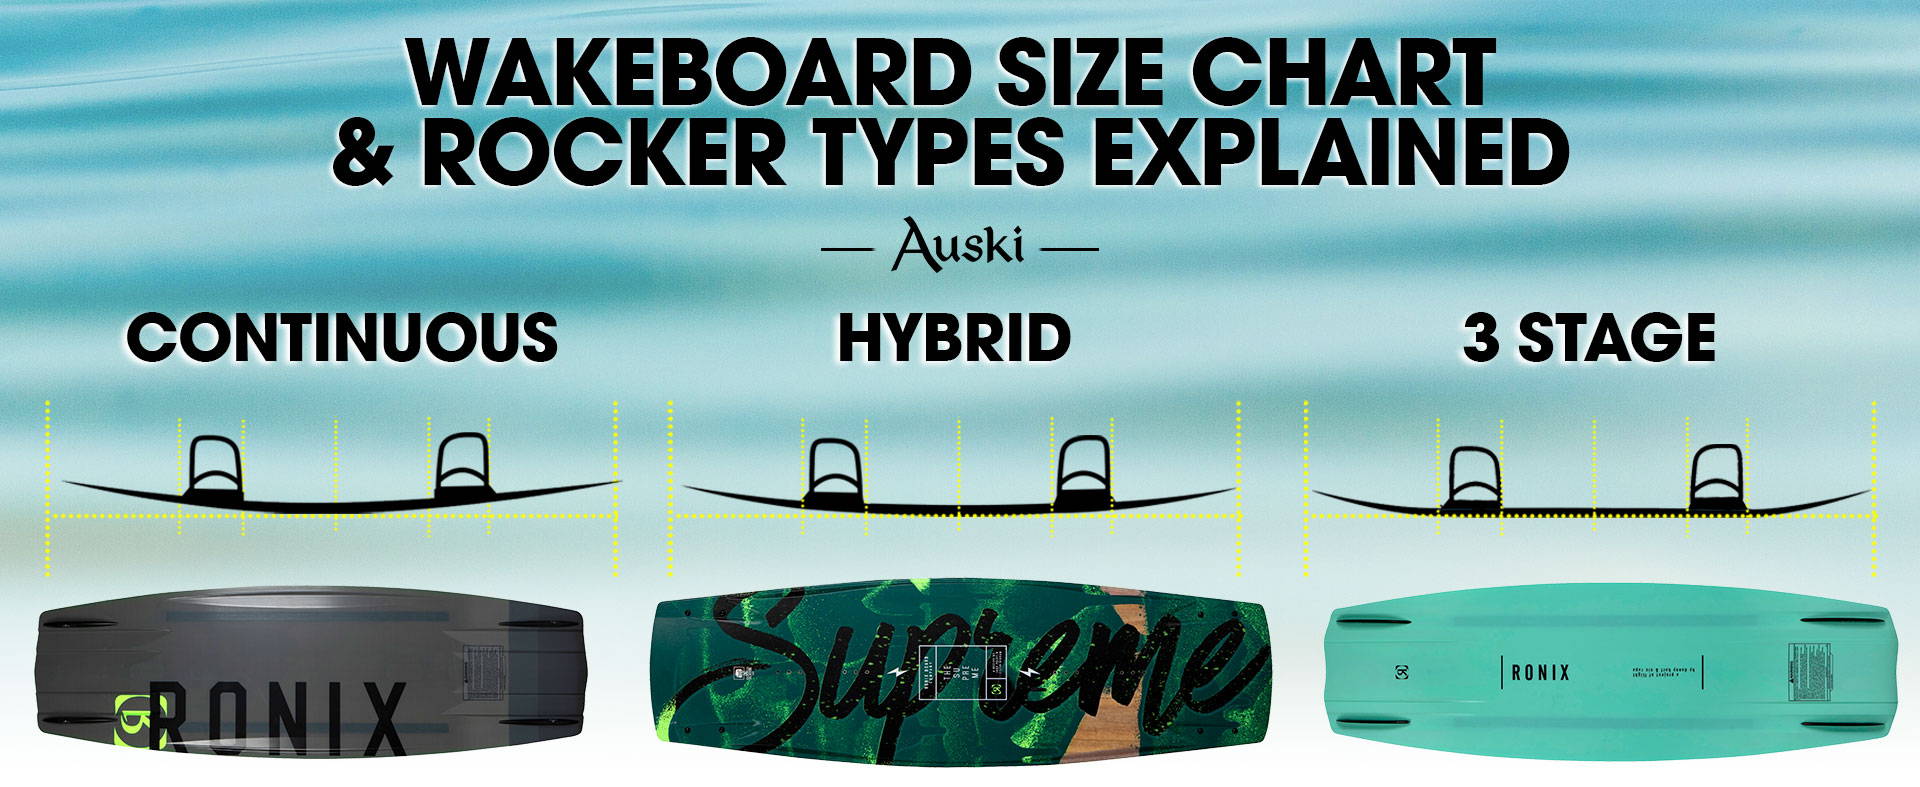 Wakeboard Size Chart & Wakeboard Rocker Types